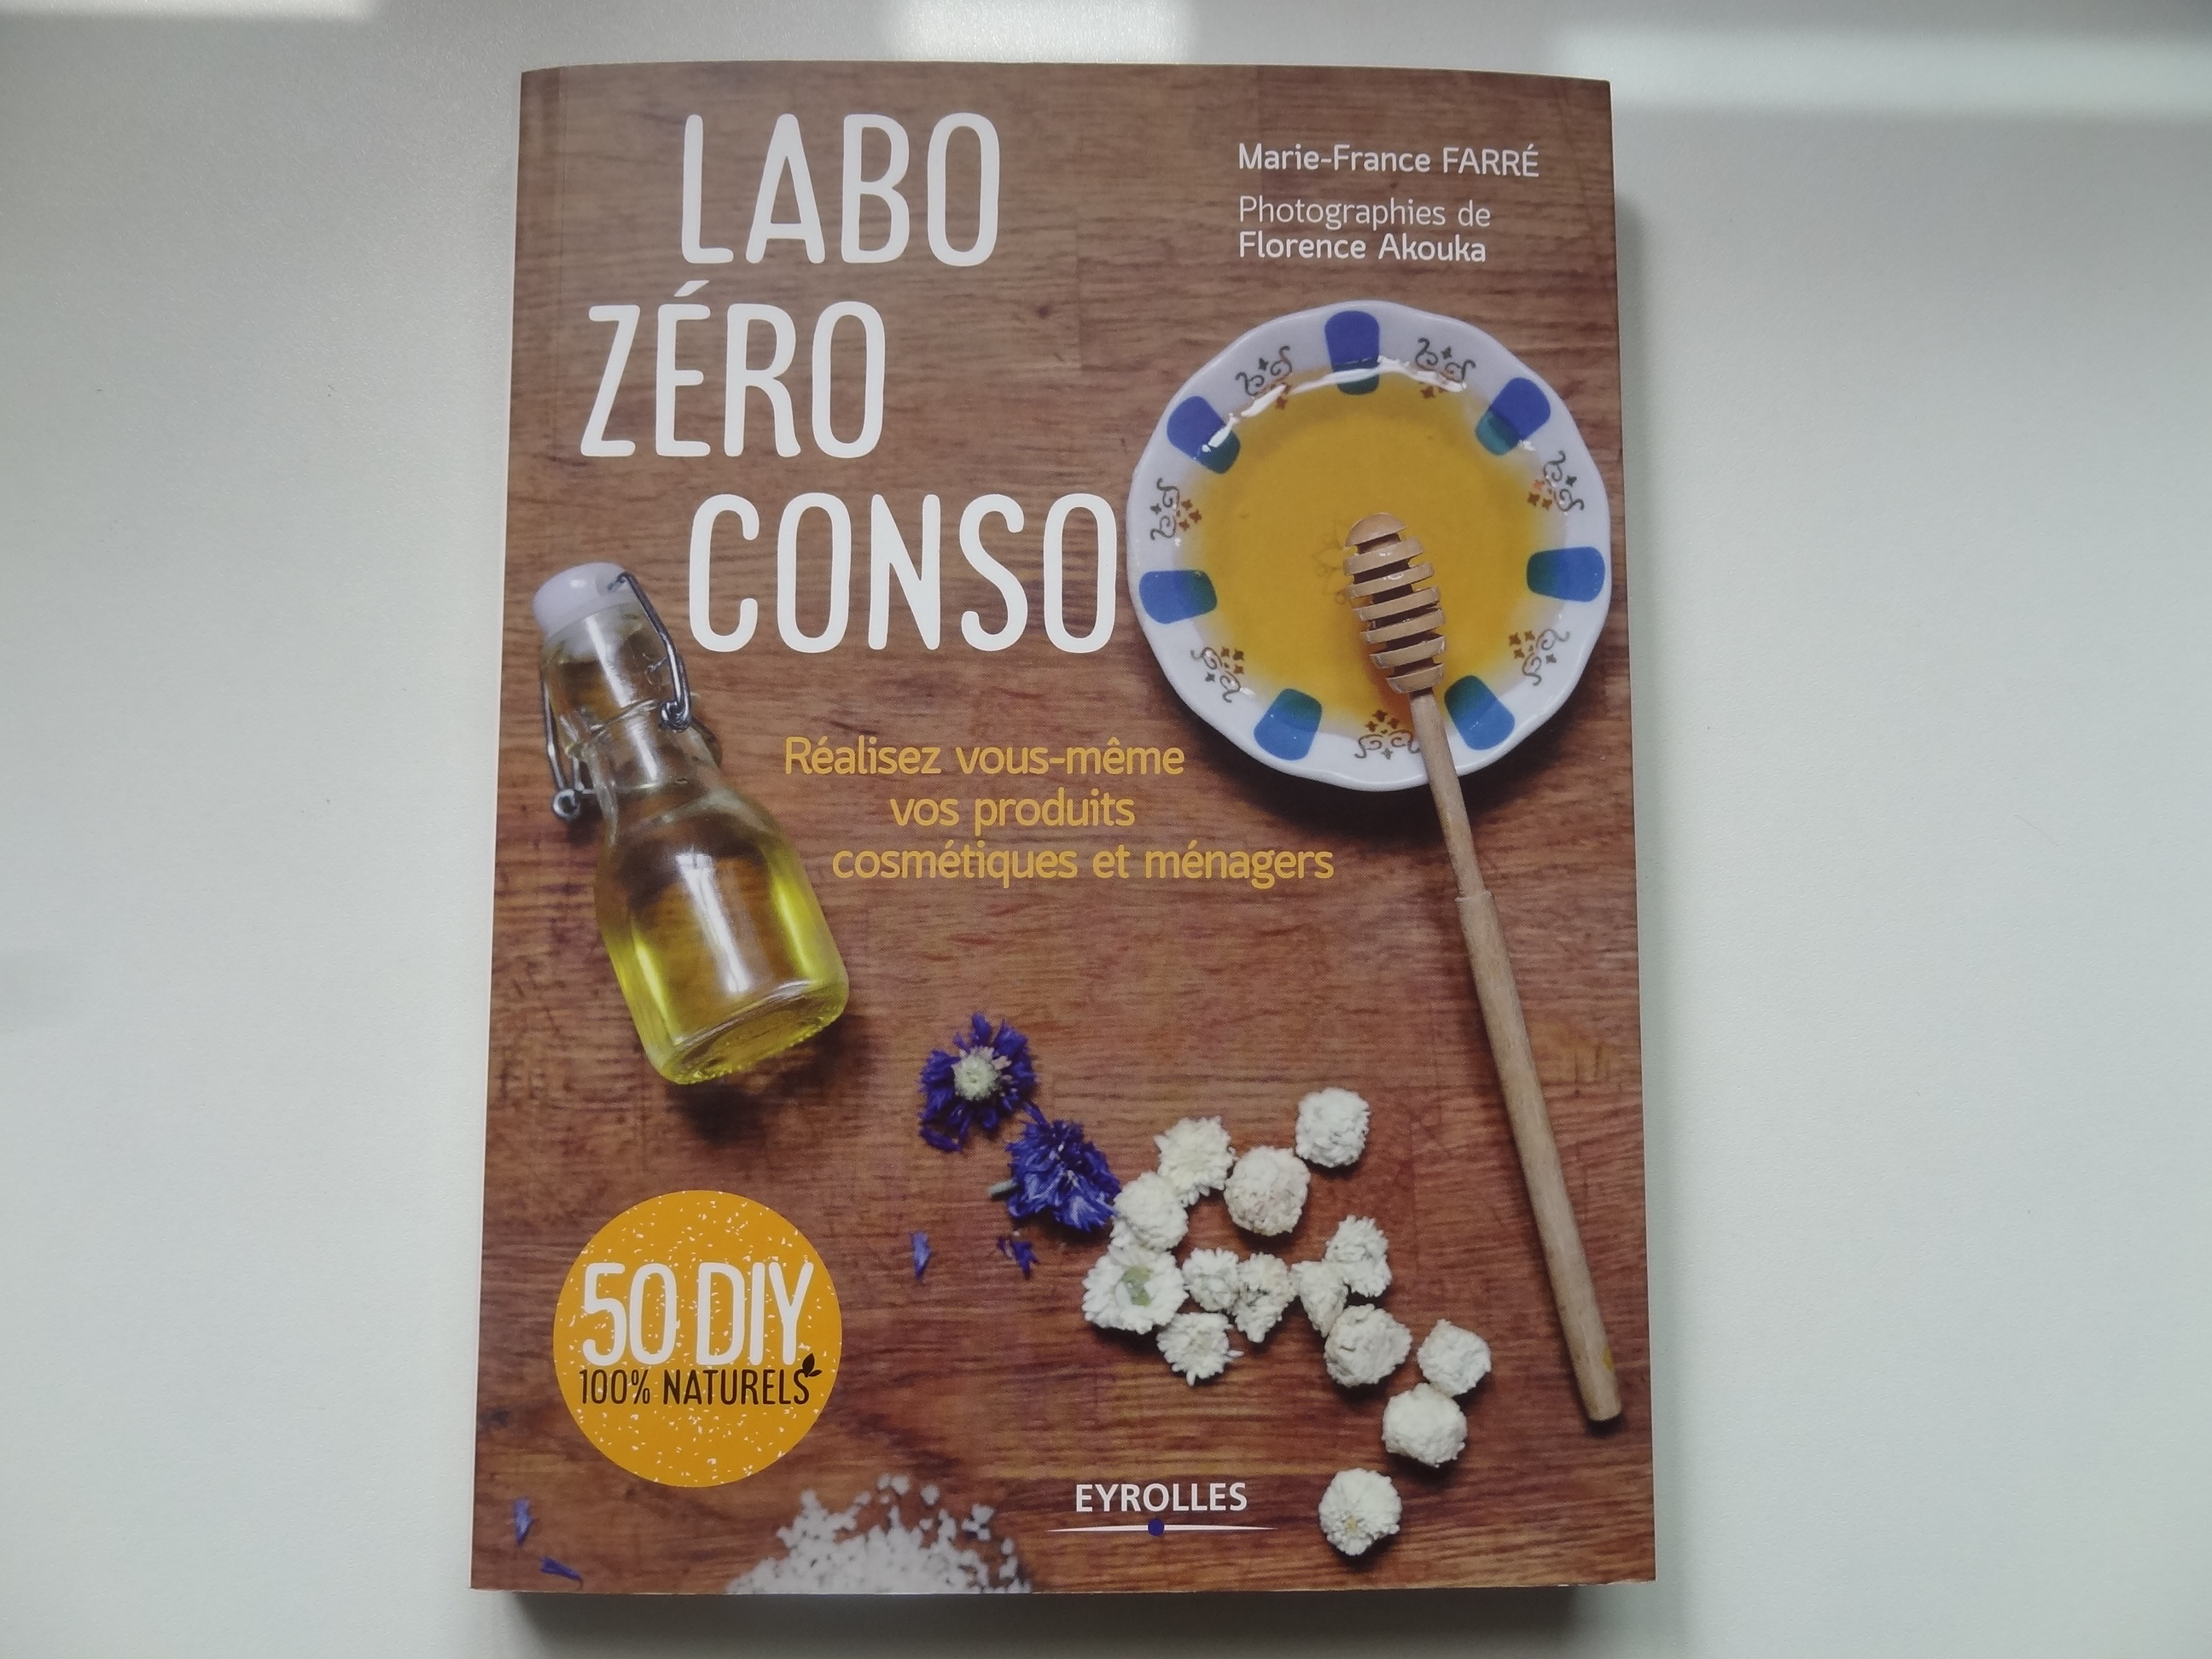 Labo Zéro Conso